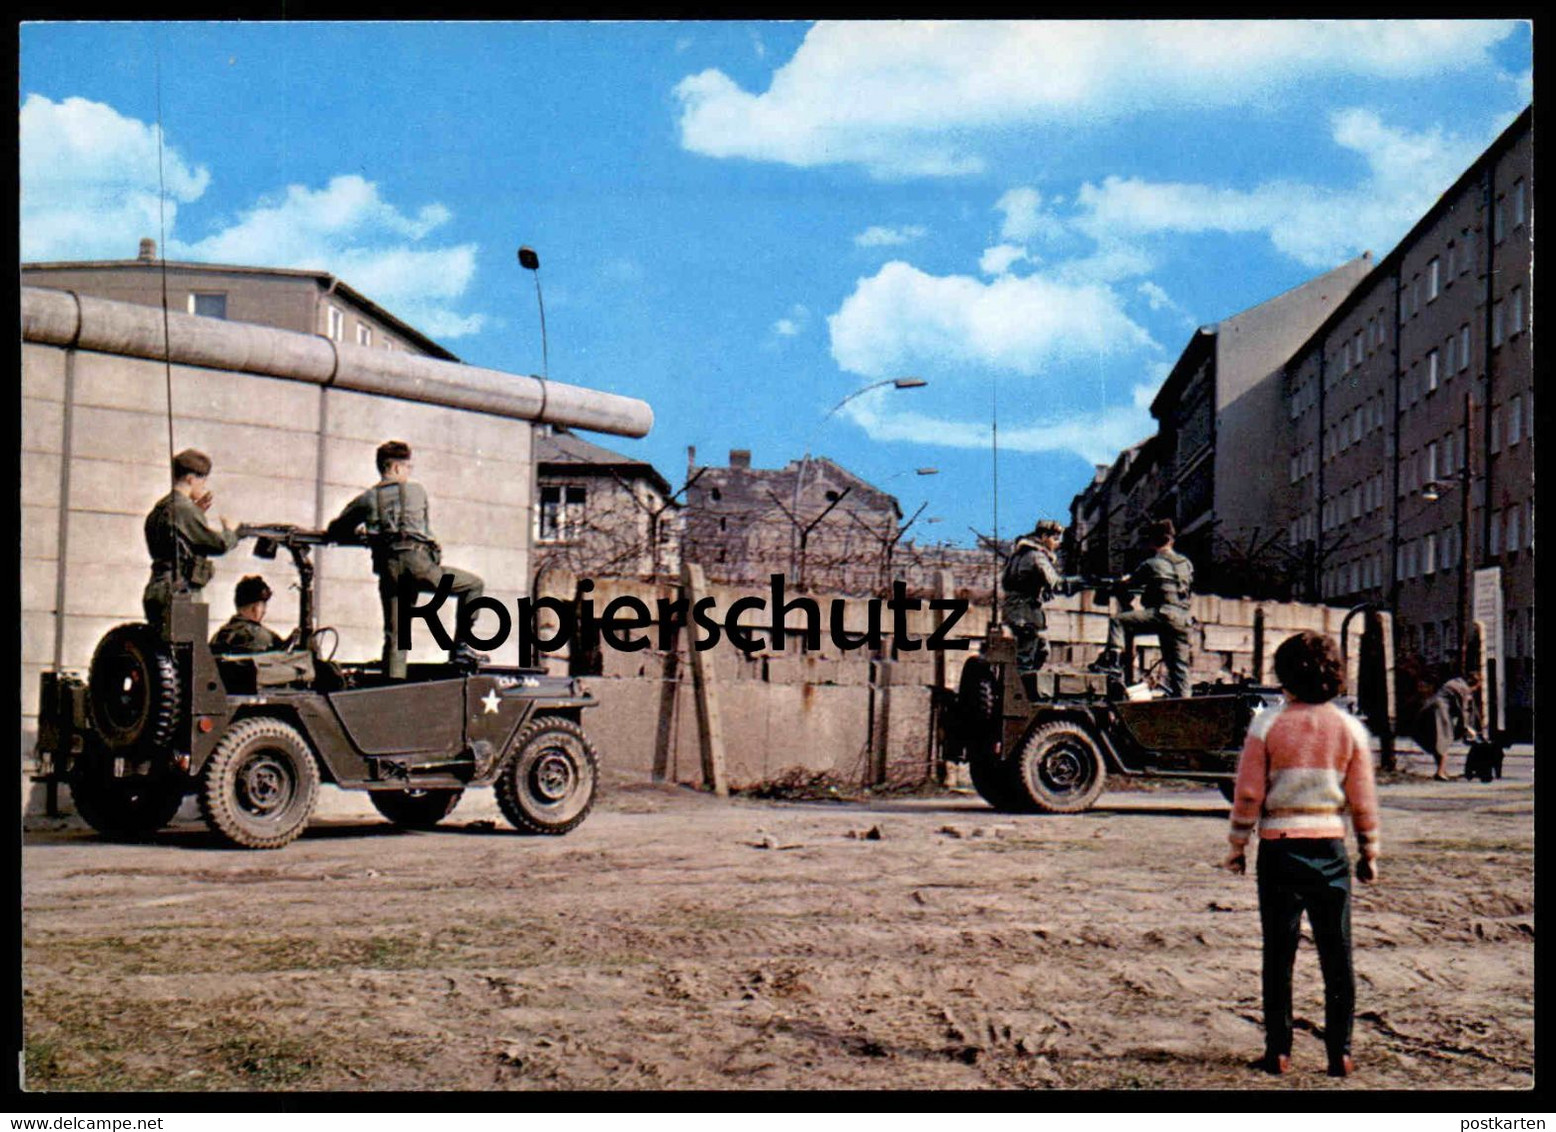 ÄLTERE POSTKARTE BERLIN DIE MAUER THE WALL LE MUR BERLINER MAUER MILITÄR SOLDATEN SOLDAT KIND Ansichtskarte Cpa Postcard - Berlin Wall